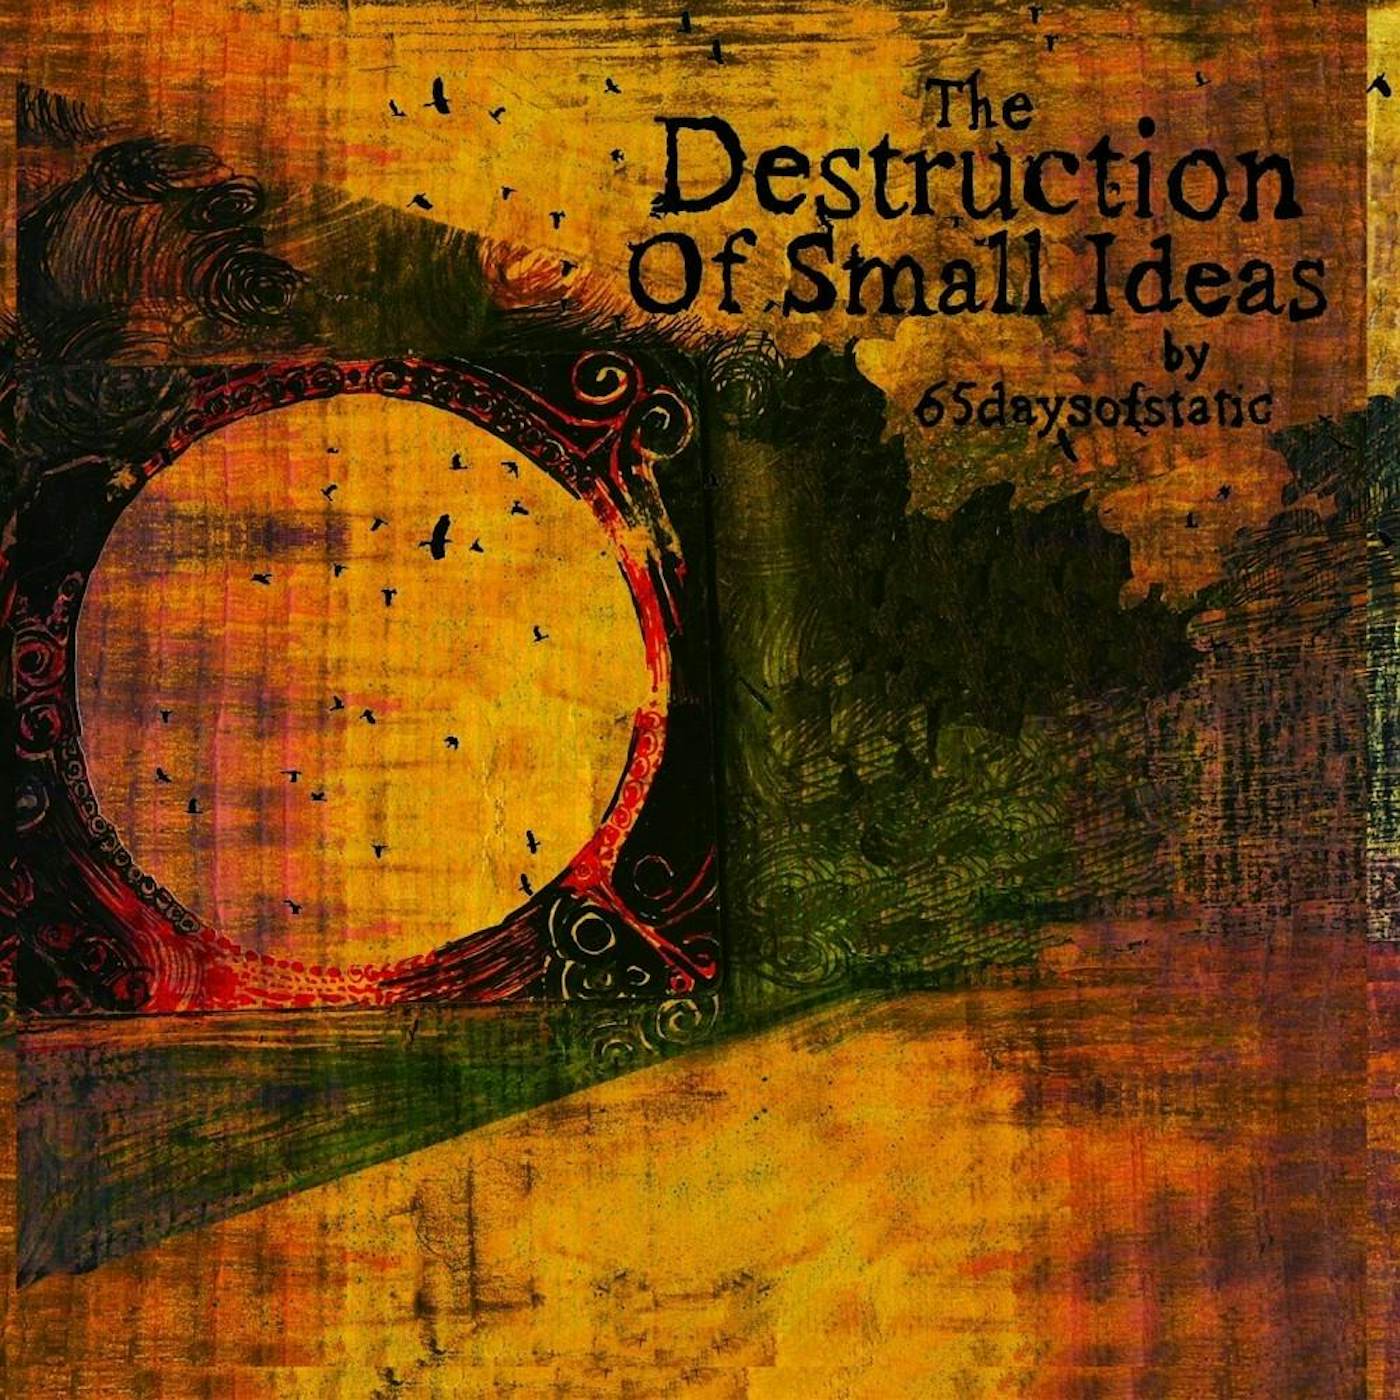 65daysofstatic 'The Destruction of Small Ideas' Vinyl Record